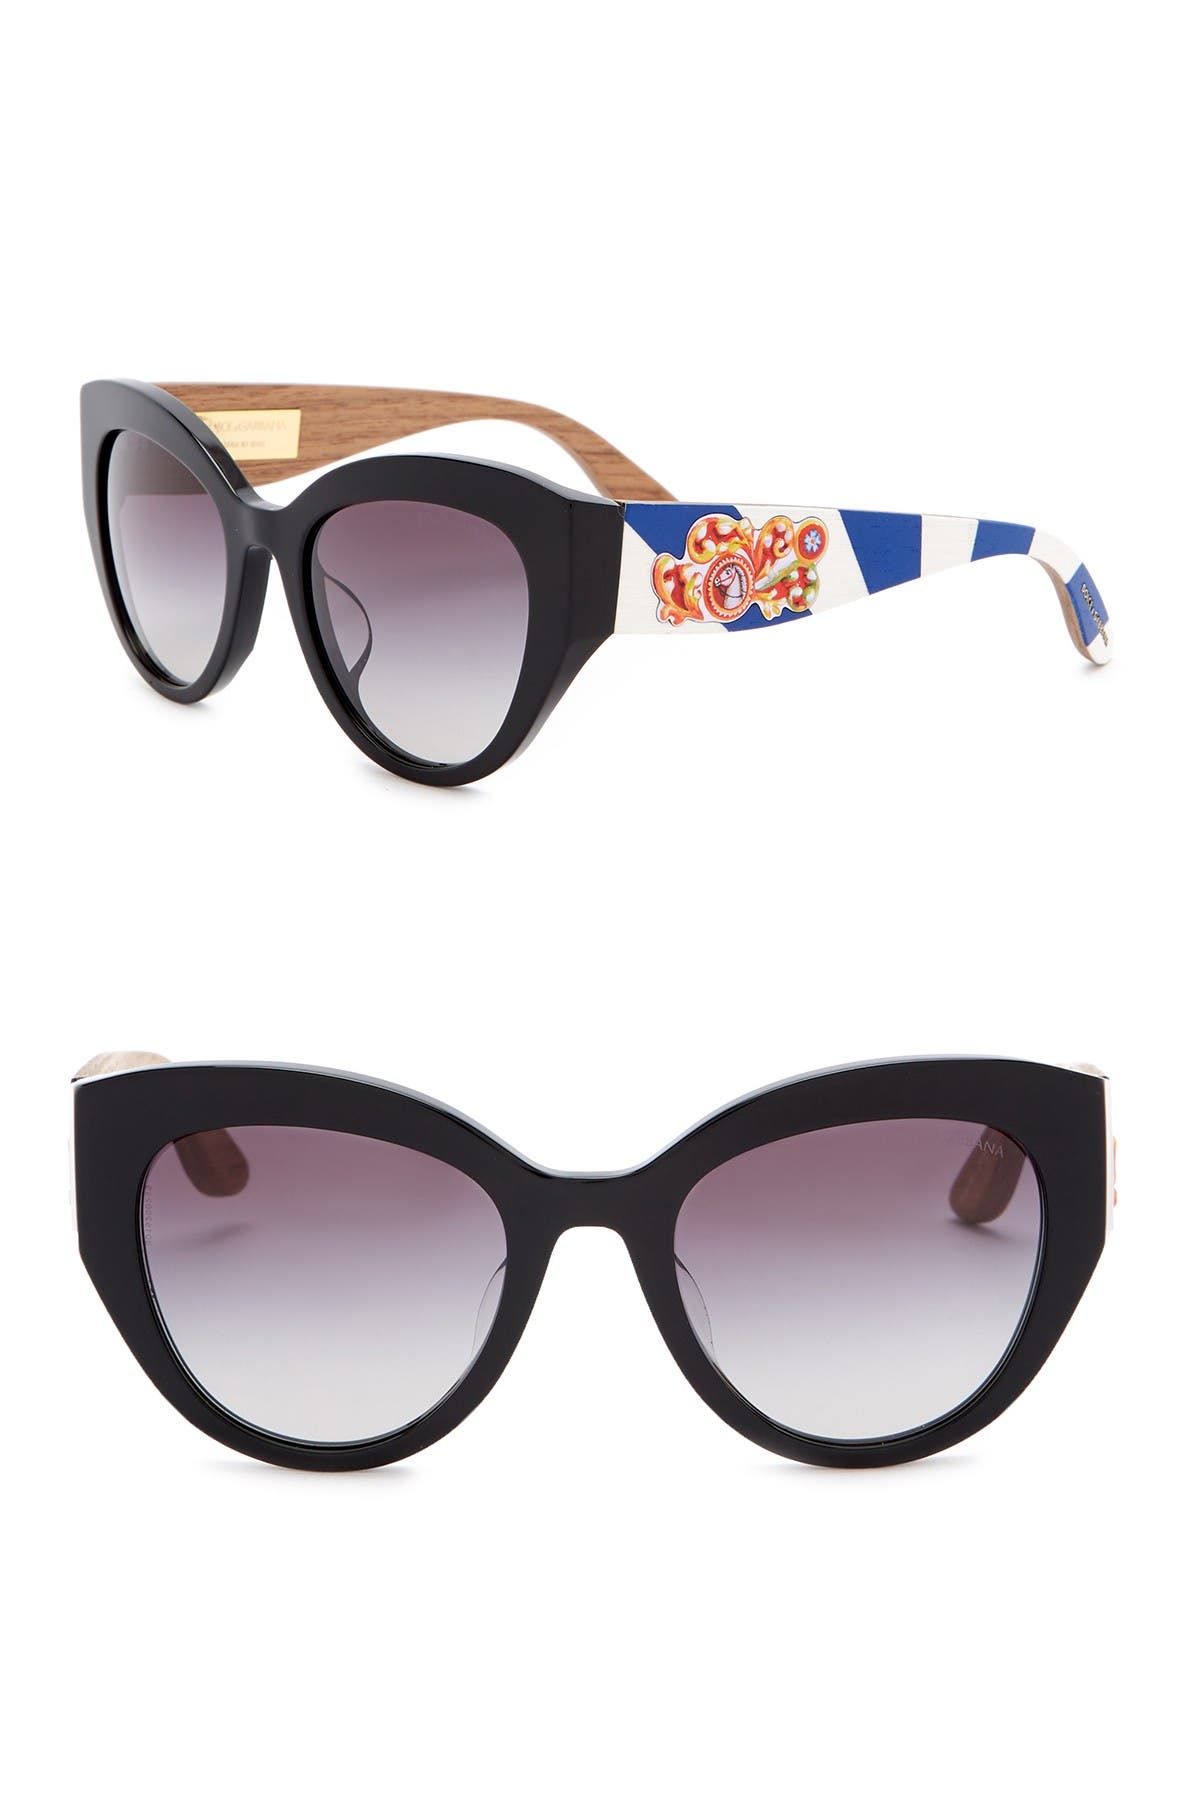 Dolce \u0026 Gabbana | Round 52mm Sunglasses 